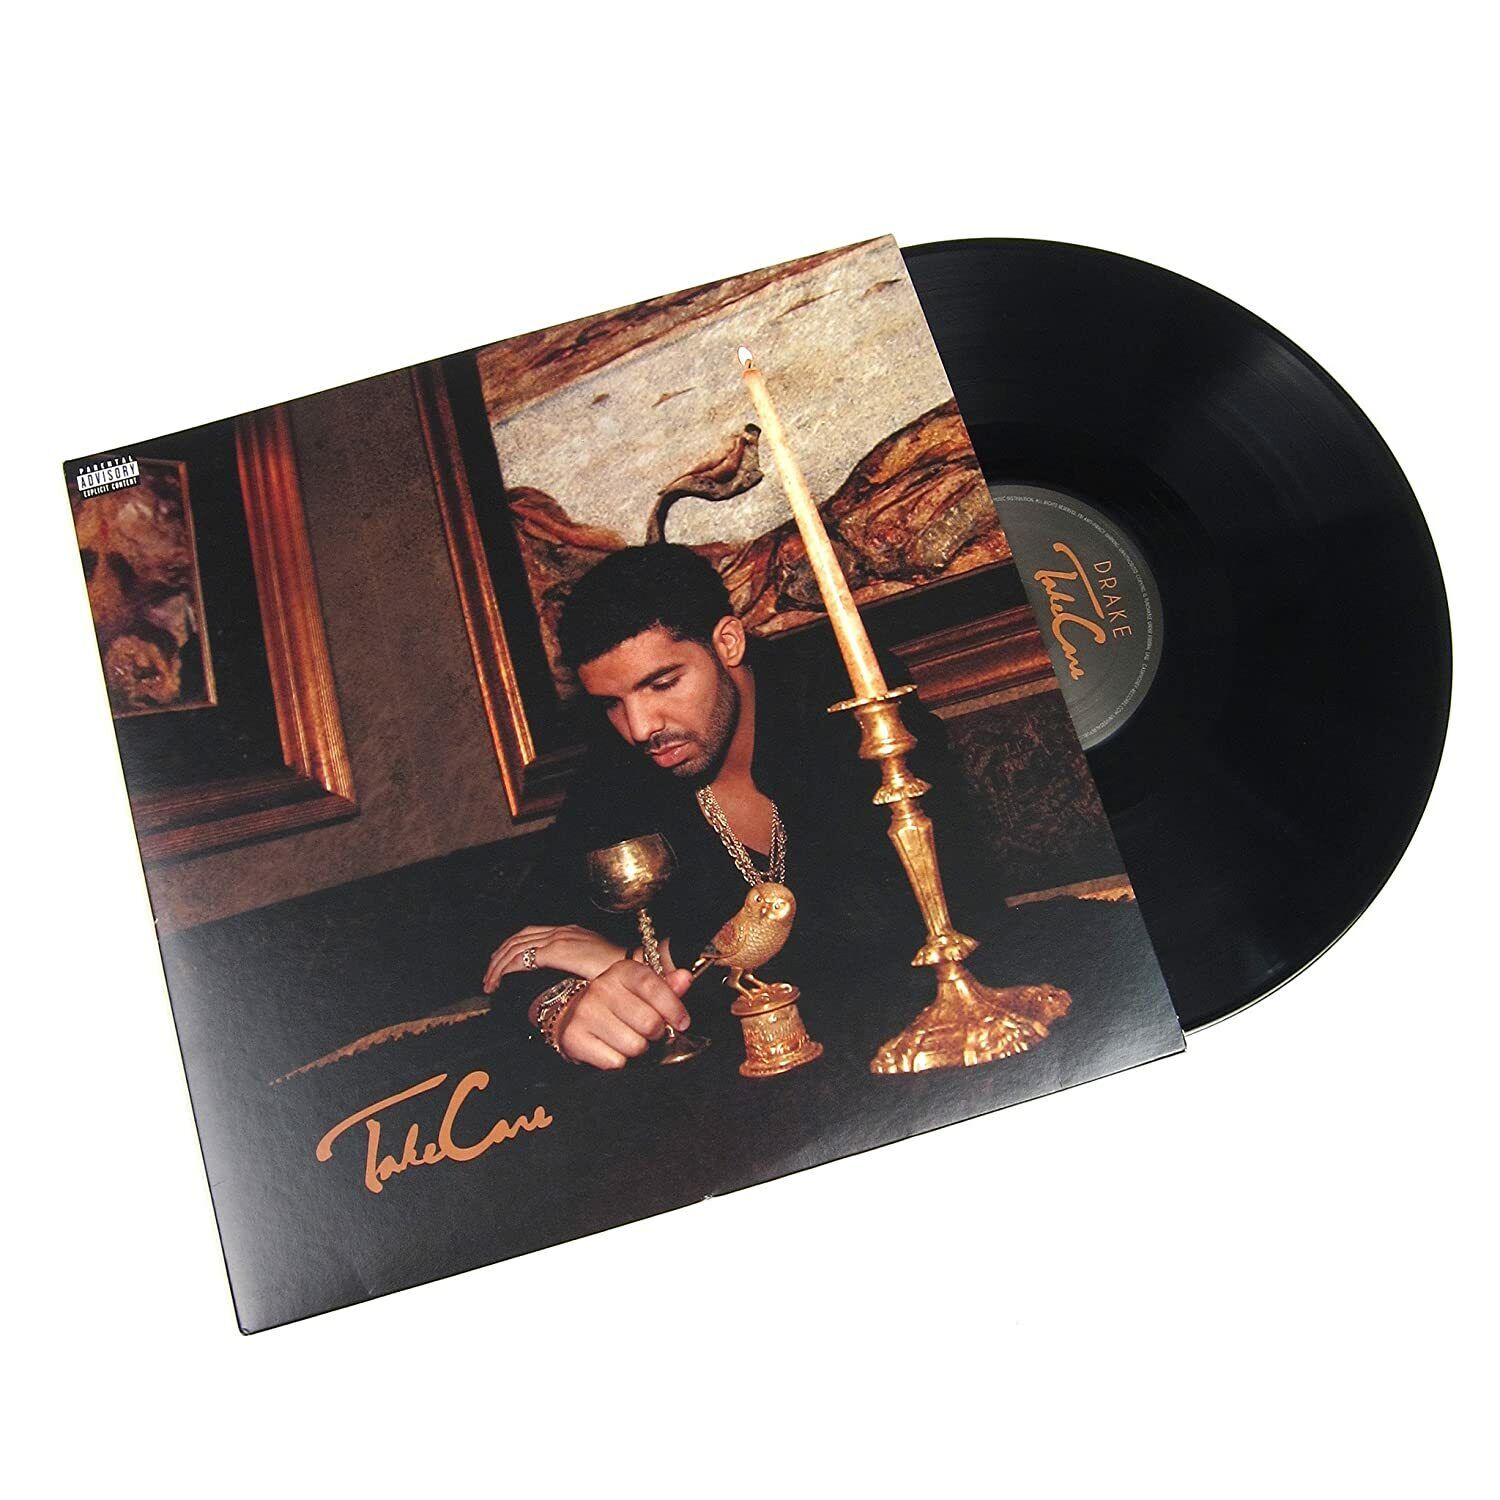 Drake Take Care 2 LP Black Vinyl Record New Factory Sealed - In Hand Ships ASAP!